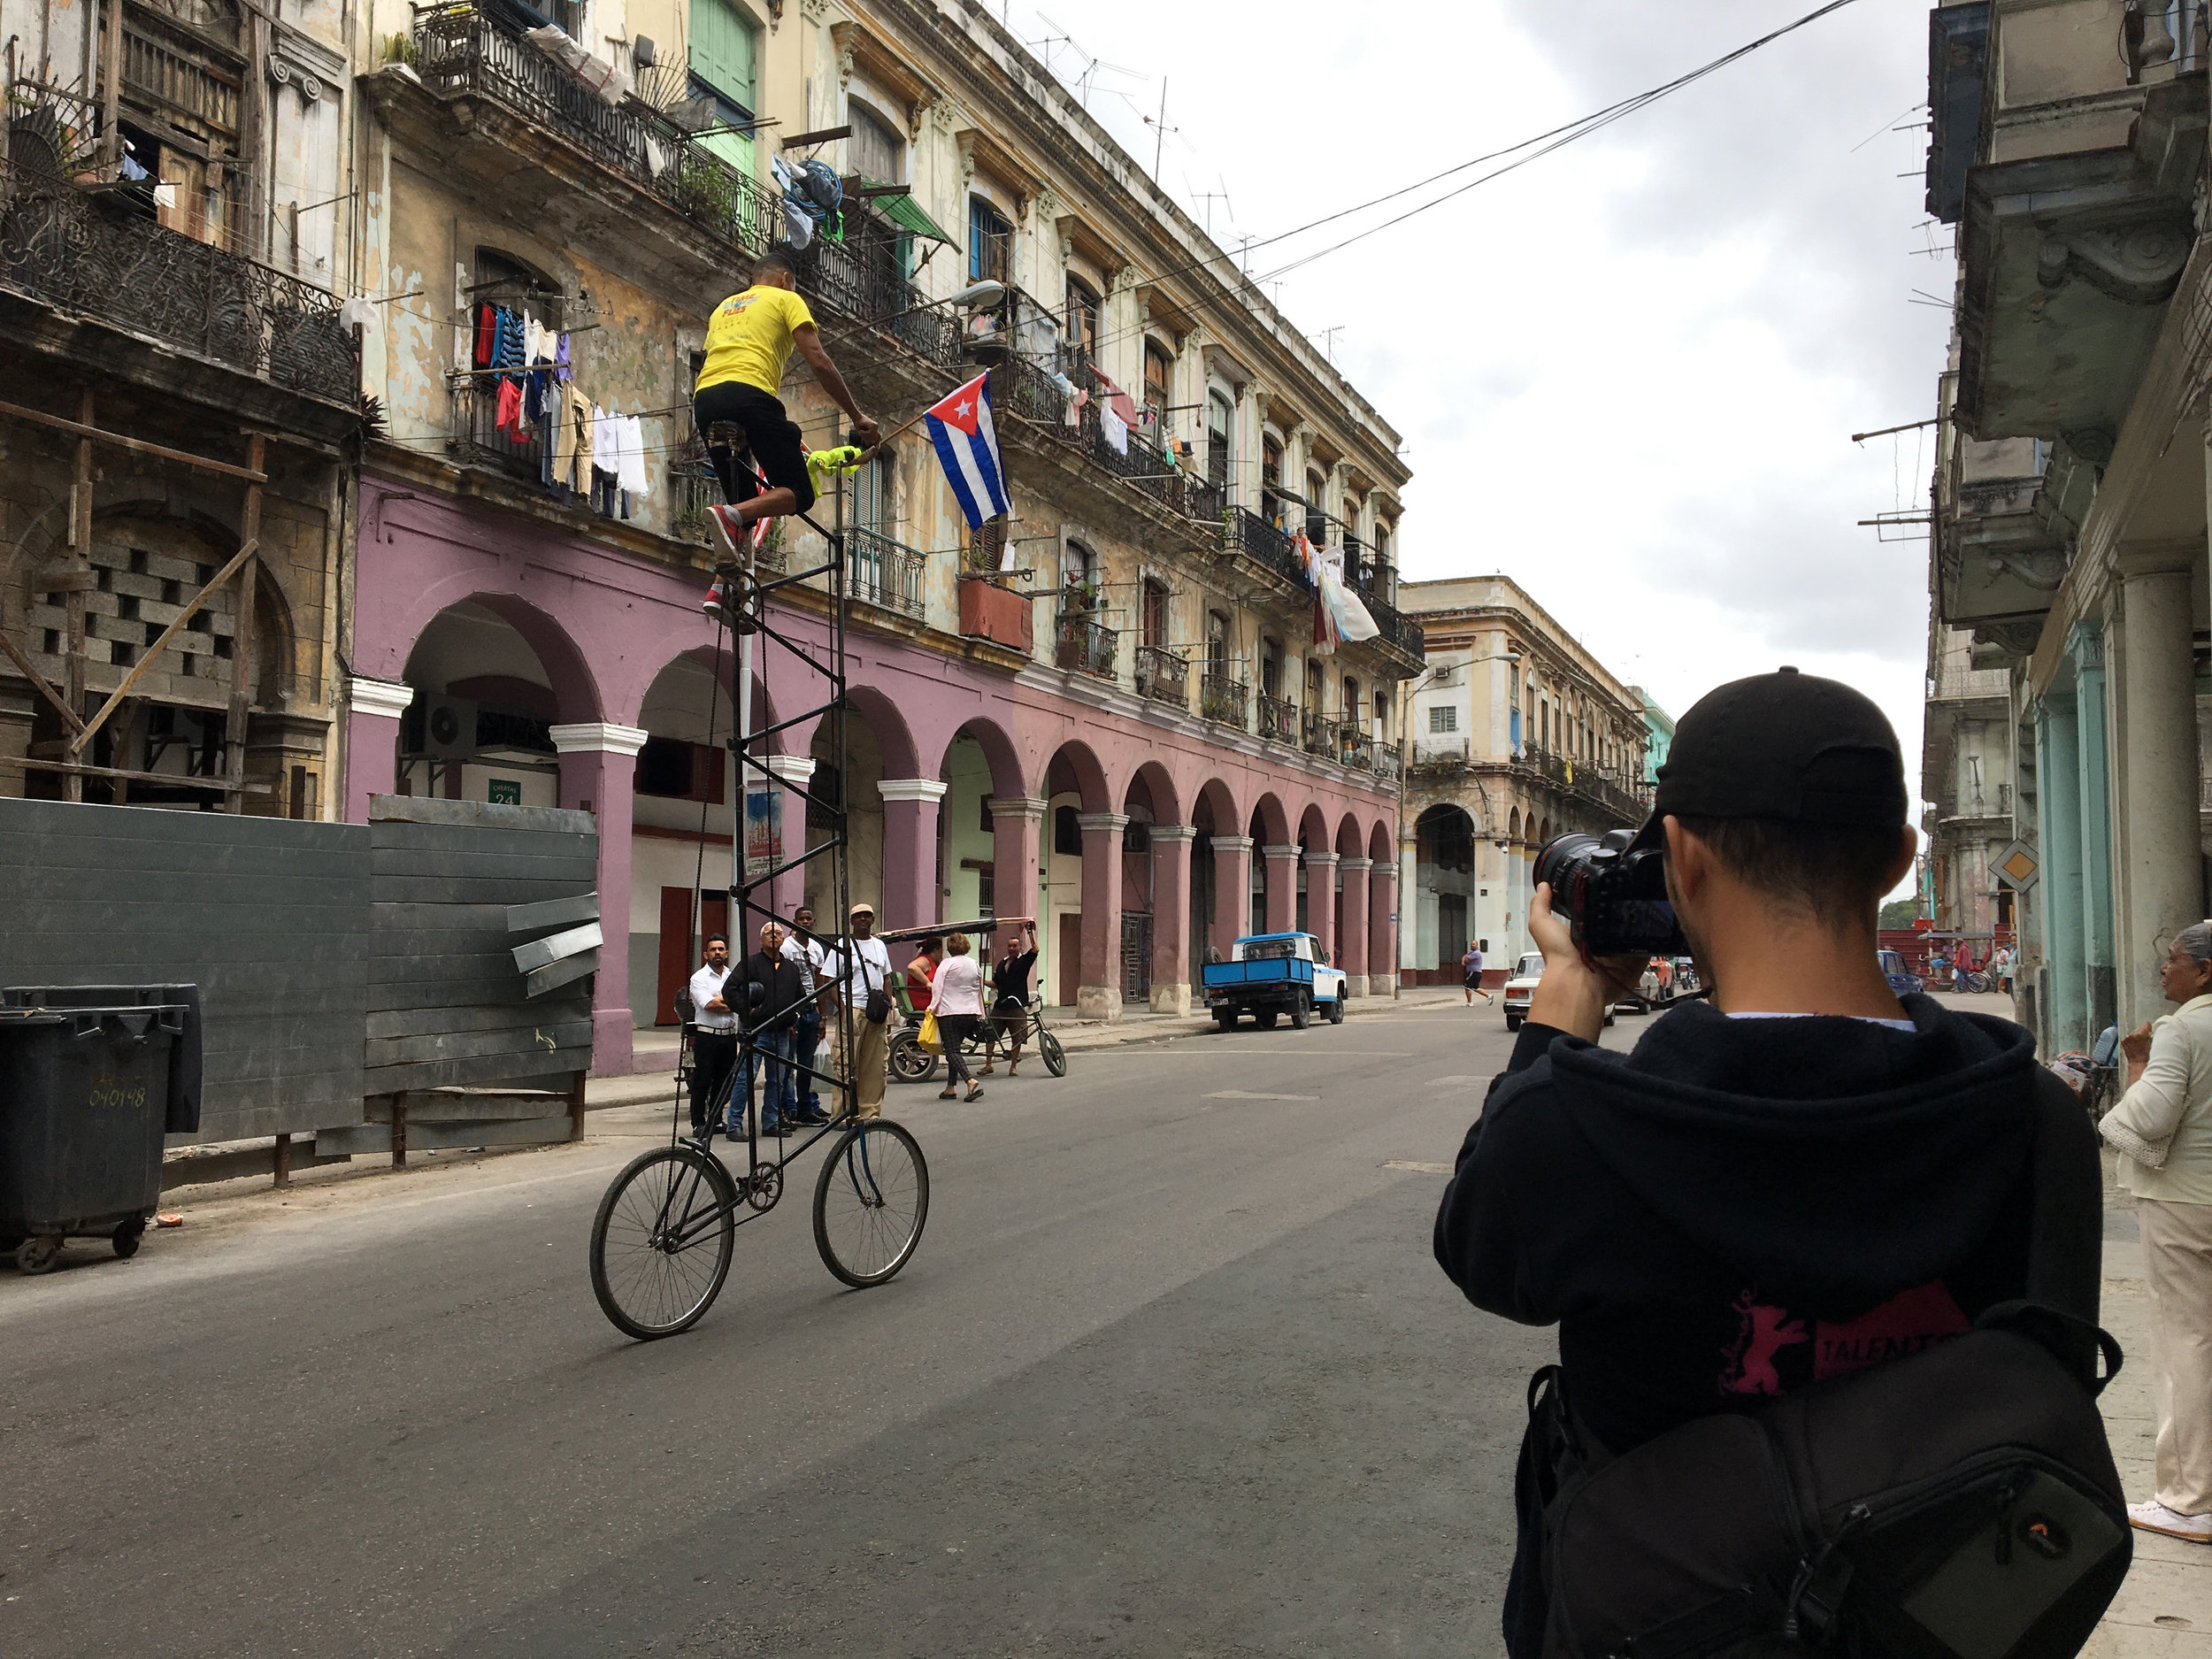  CUBA- The production team filmed an interview with a cuban citizen, Felix Guirola. They were able to capture him as he rode his peculiar bike on the streets of Cuba.

El equipo de producción filmó una entrevista con un ciudadano cubano, Félix Guirol